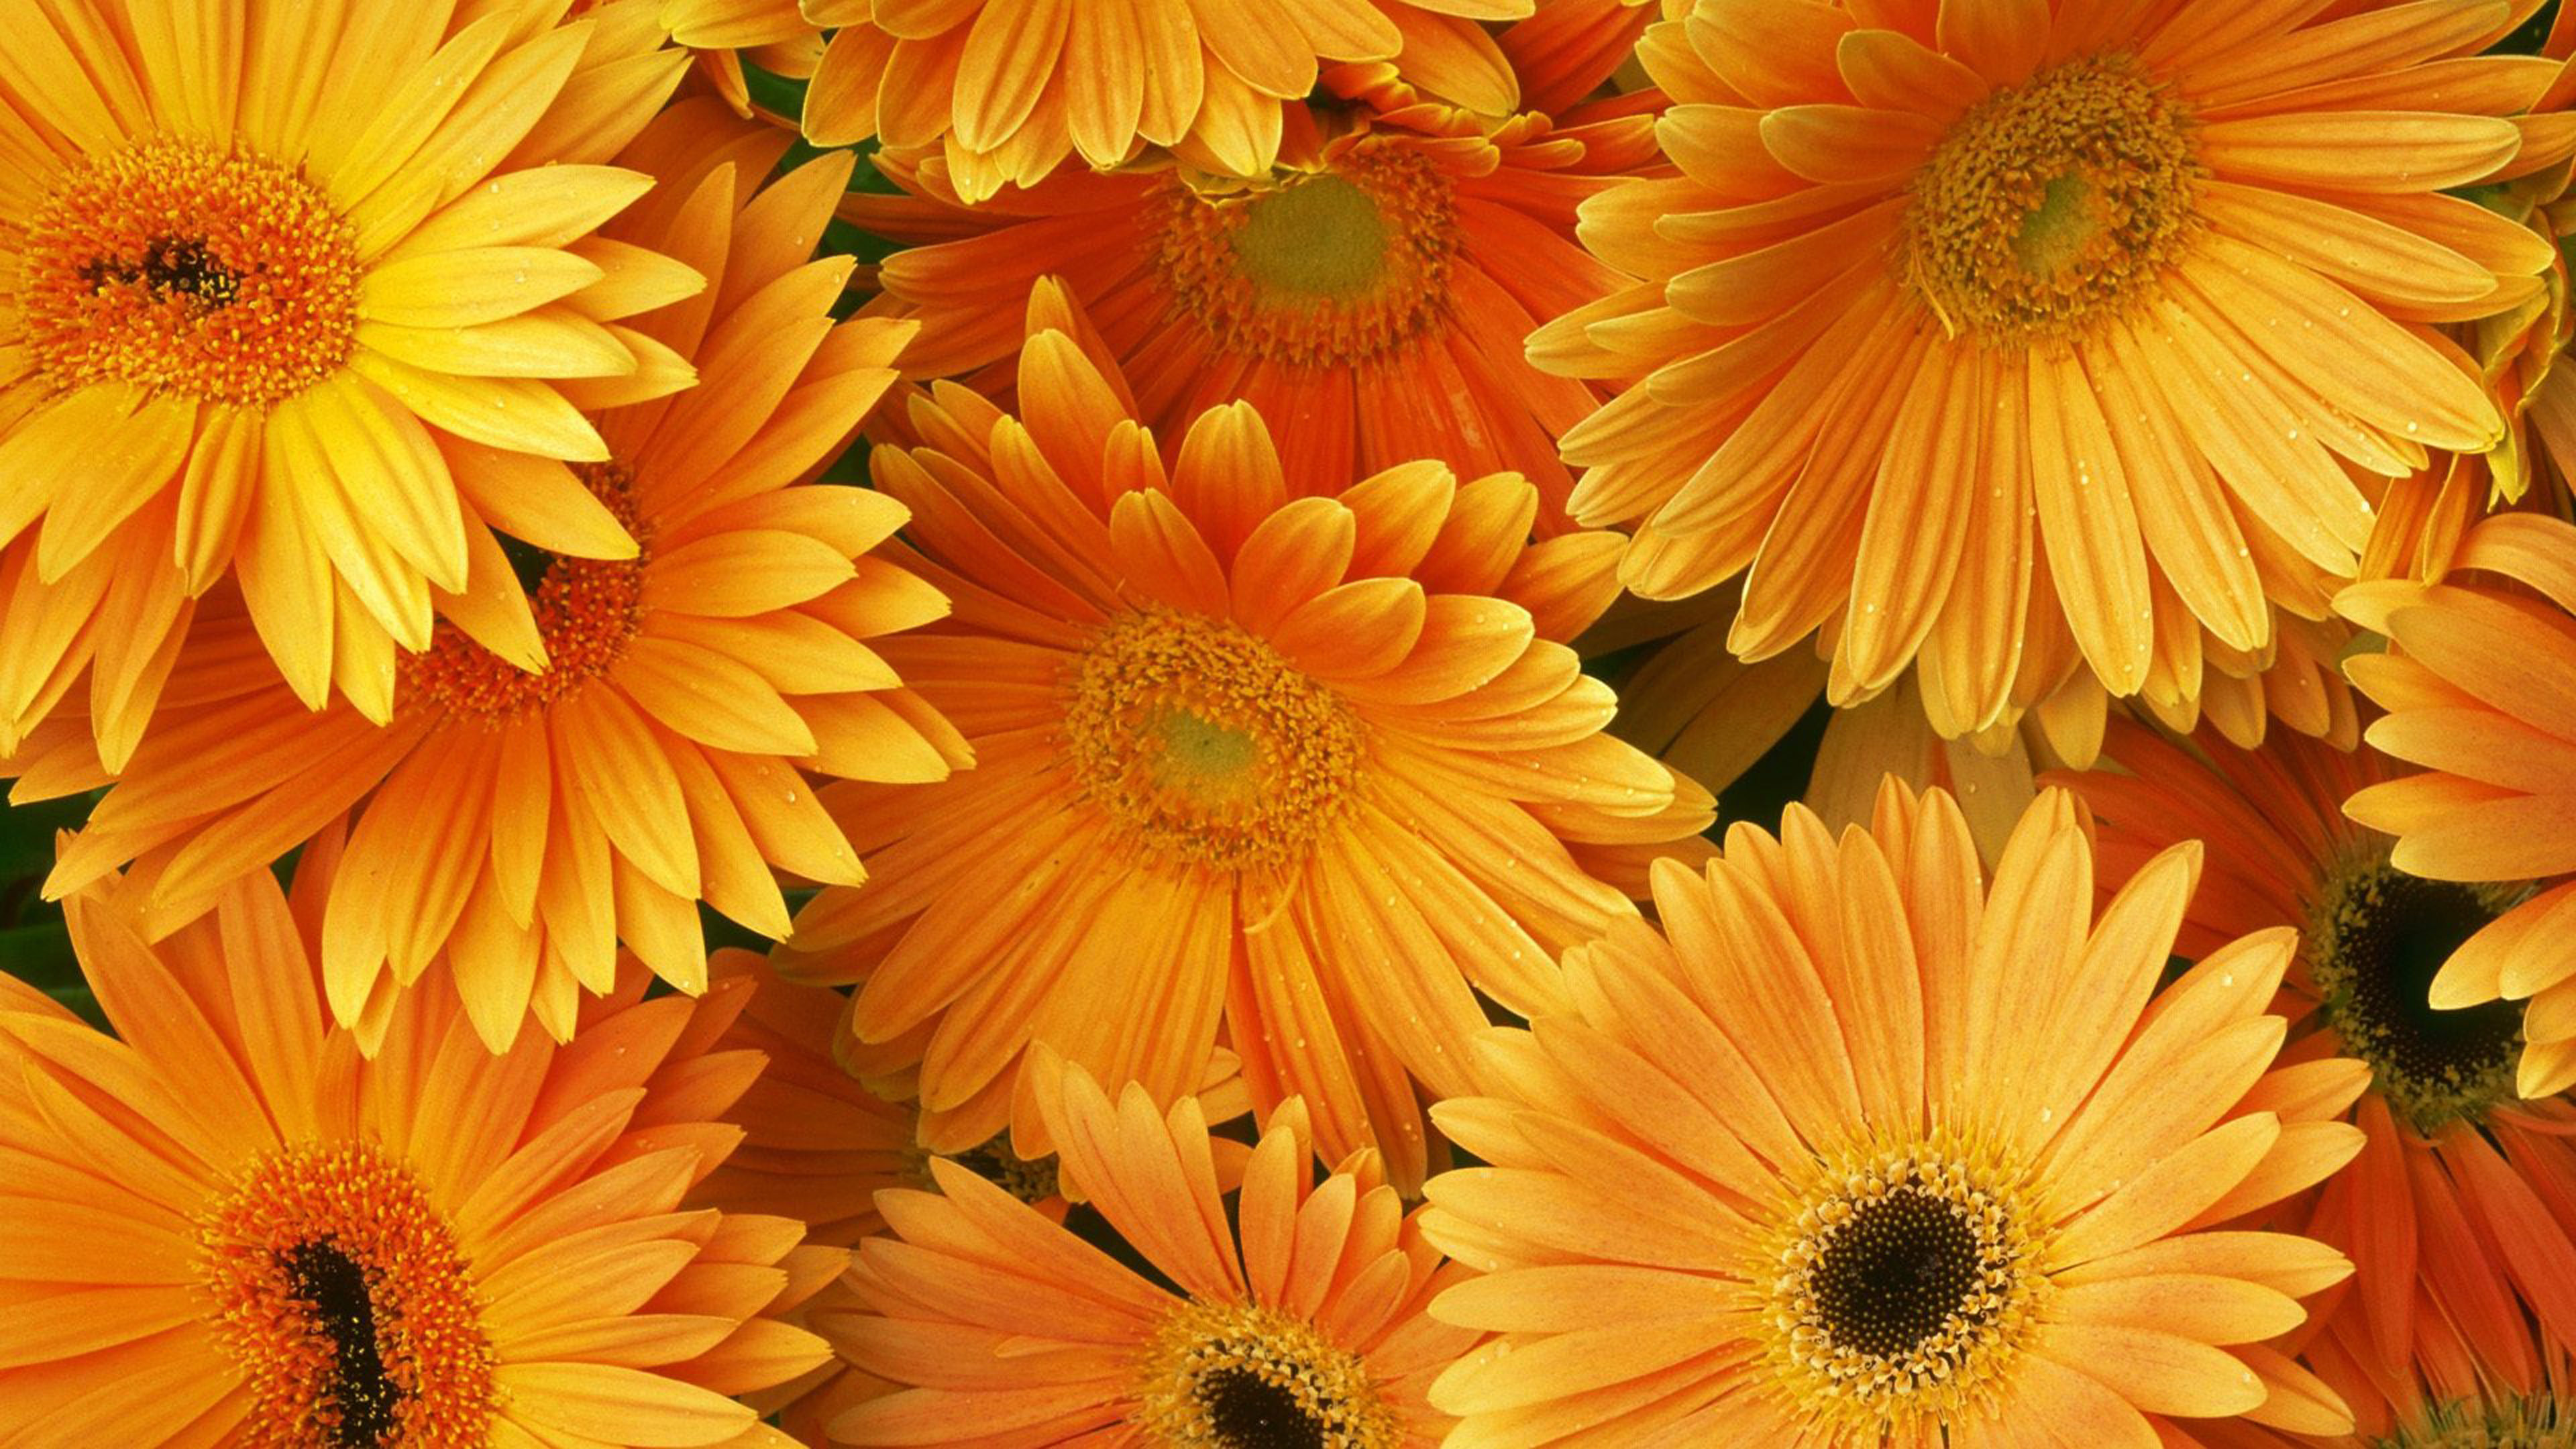 Orange Flowers Hd Desktop Backgrounds Free Download ...